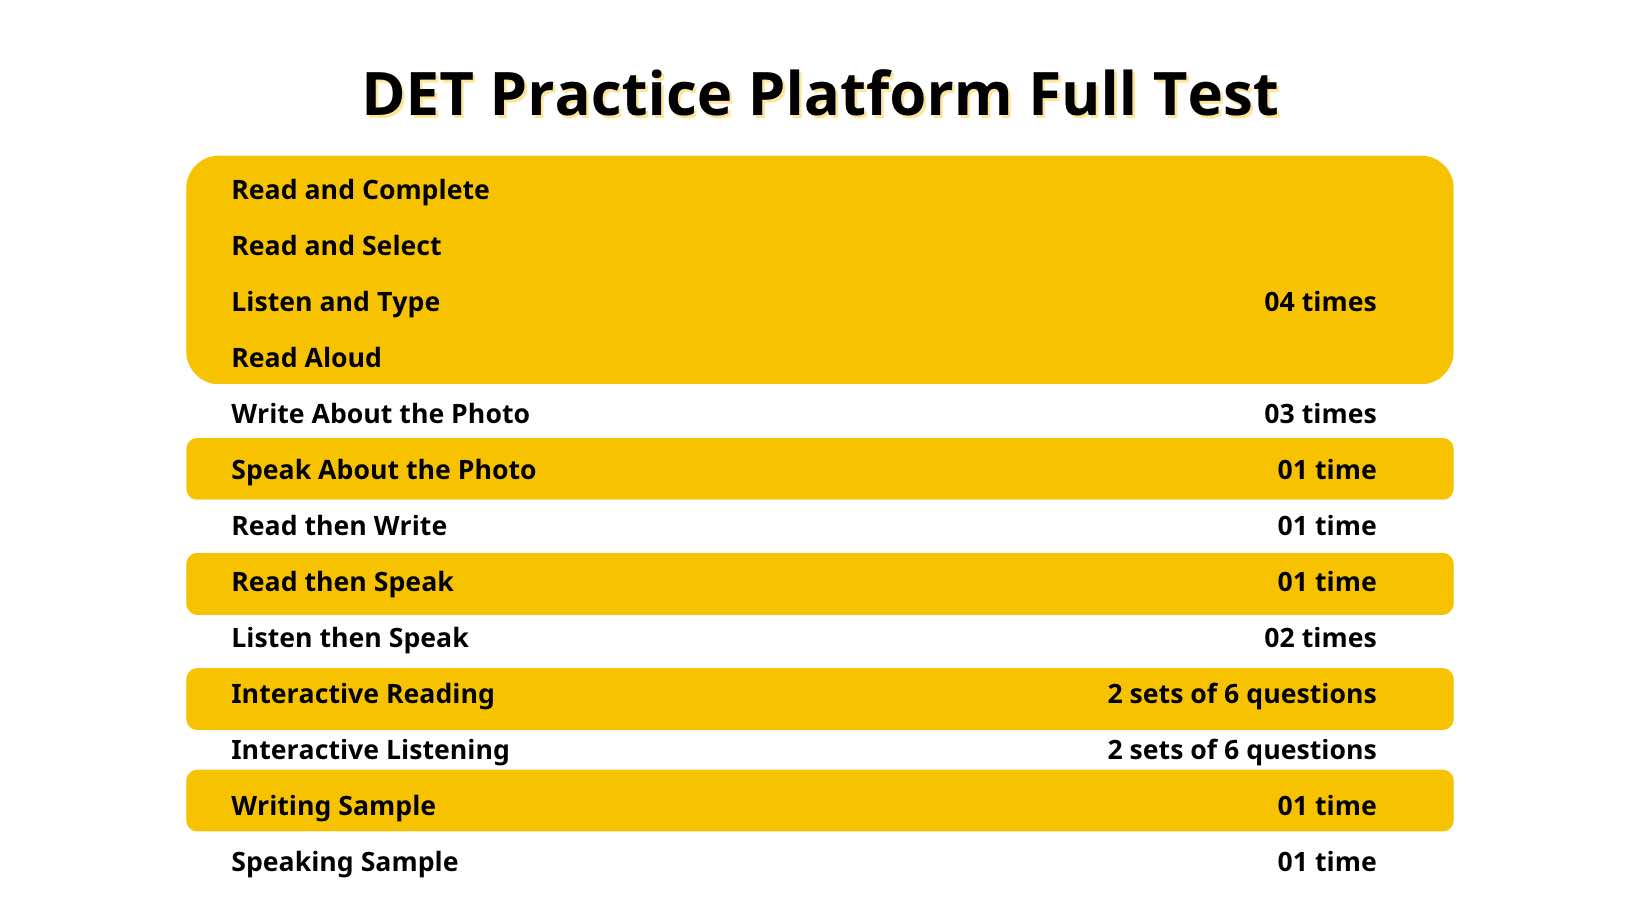 DET frequency questions, free DET practice tests, Duolingo English Test, DET Ready, DET Practice, DET Practice Platform